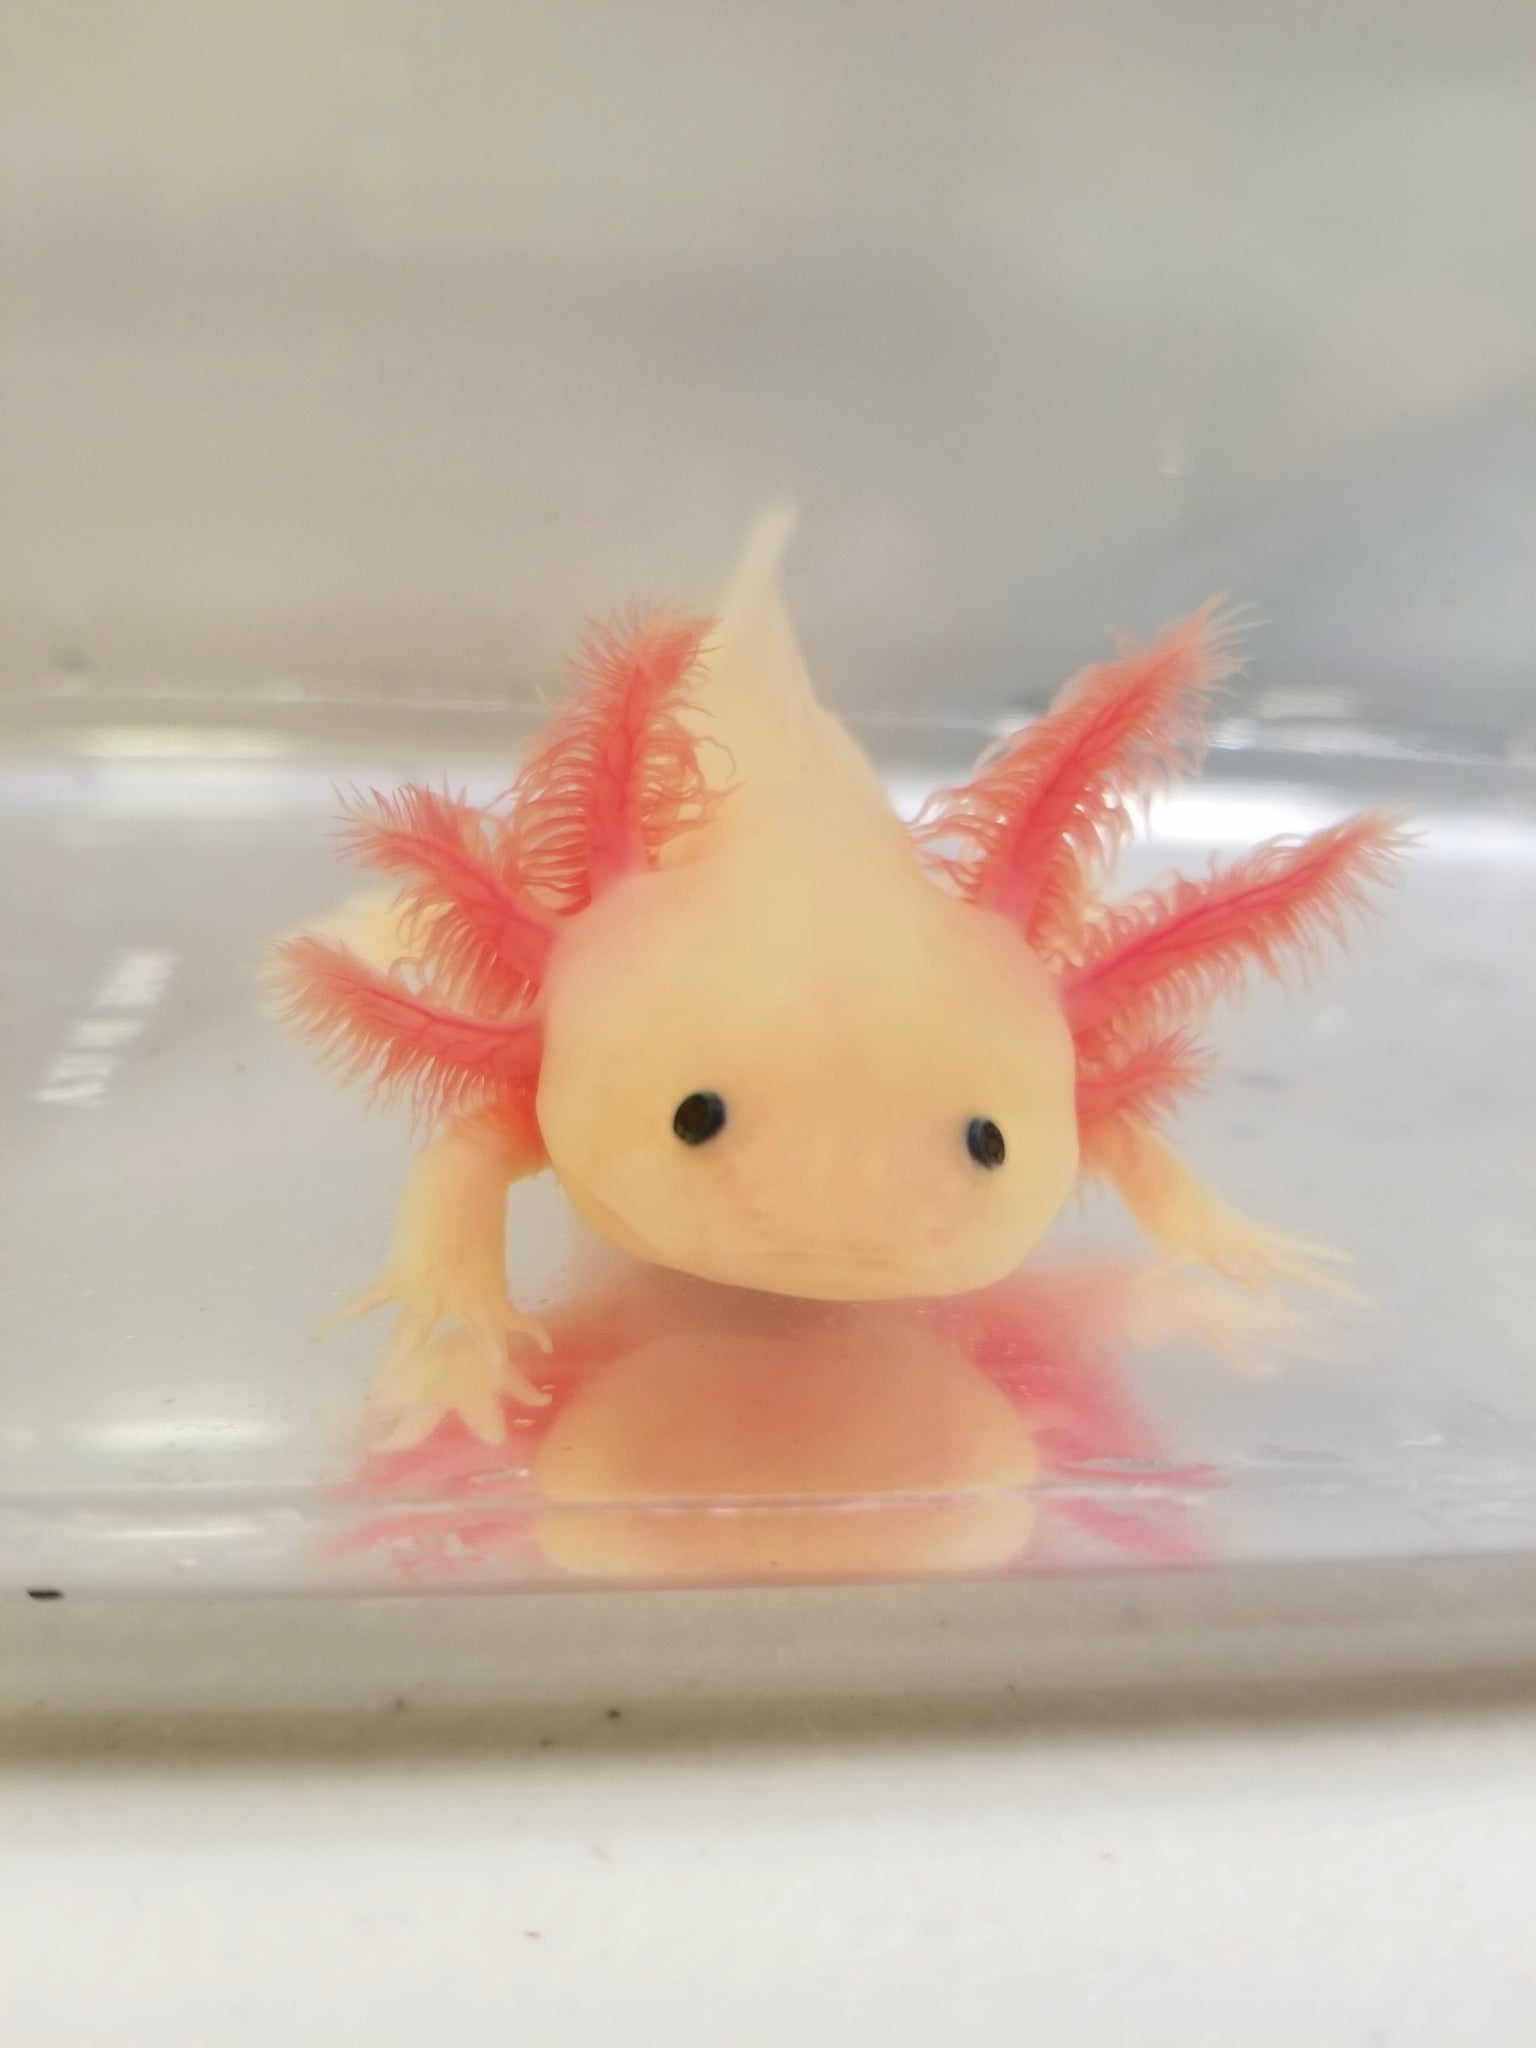 7 Inch Sub Adult Pink Lucy Leucistic Axolotl Gfp 2 Ivy S Axolotls Quality Pet Axolotls Since 18